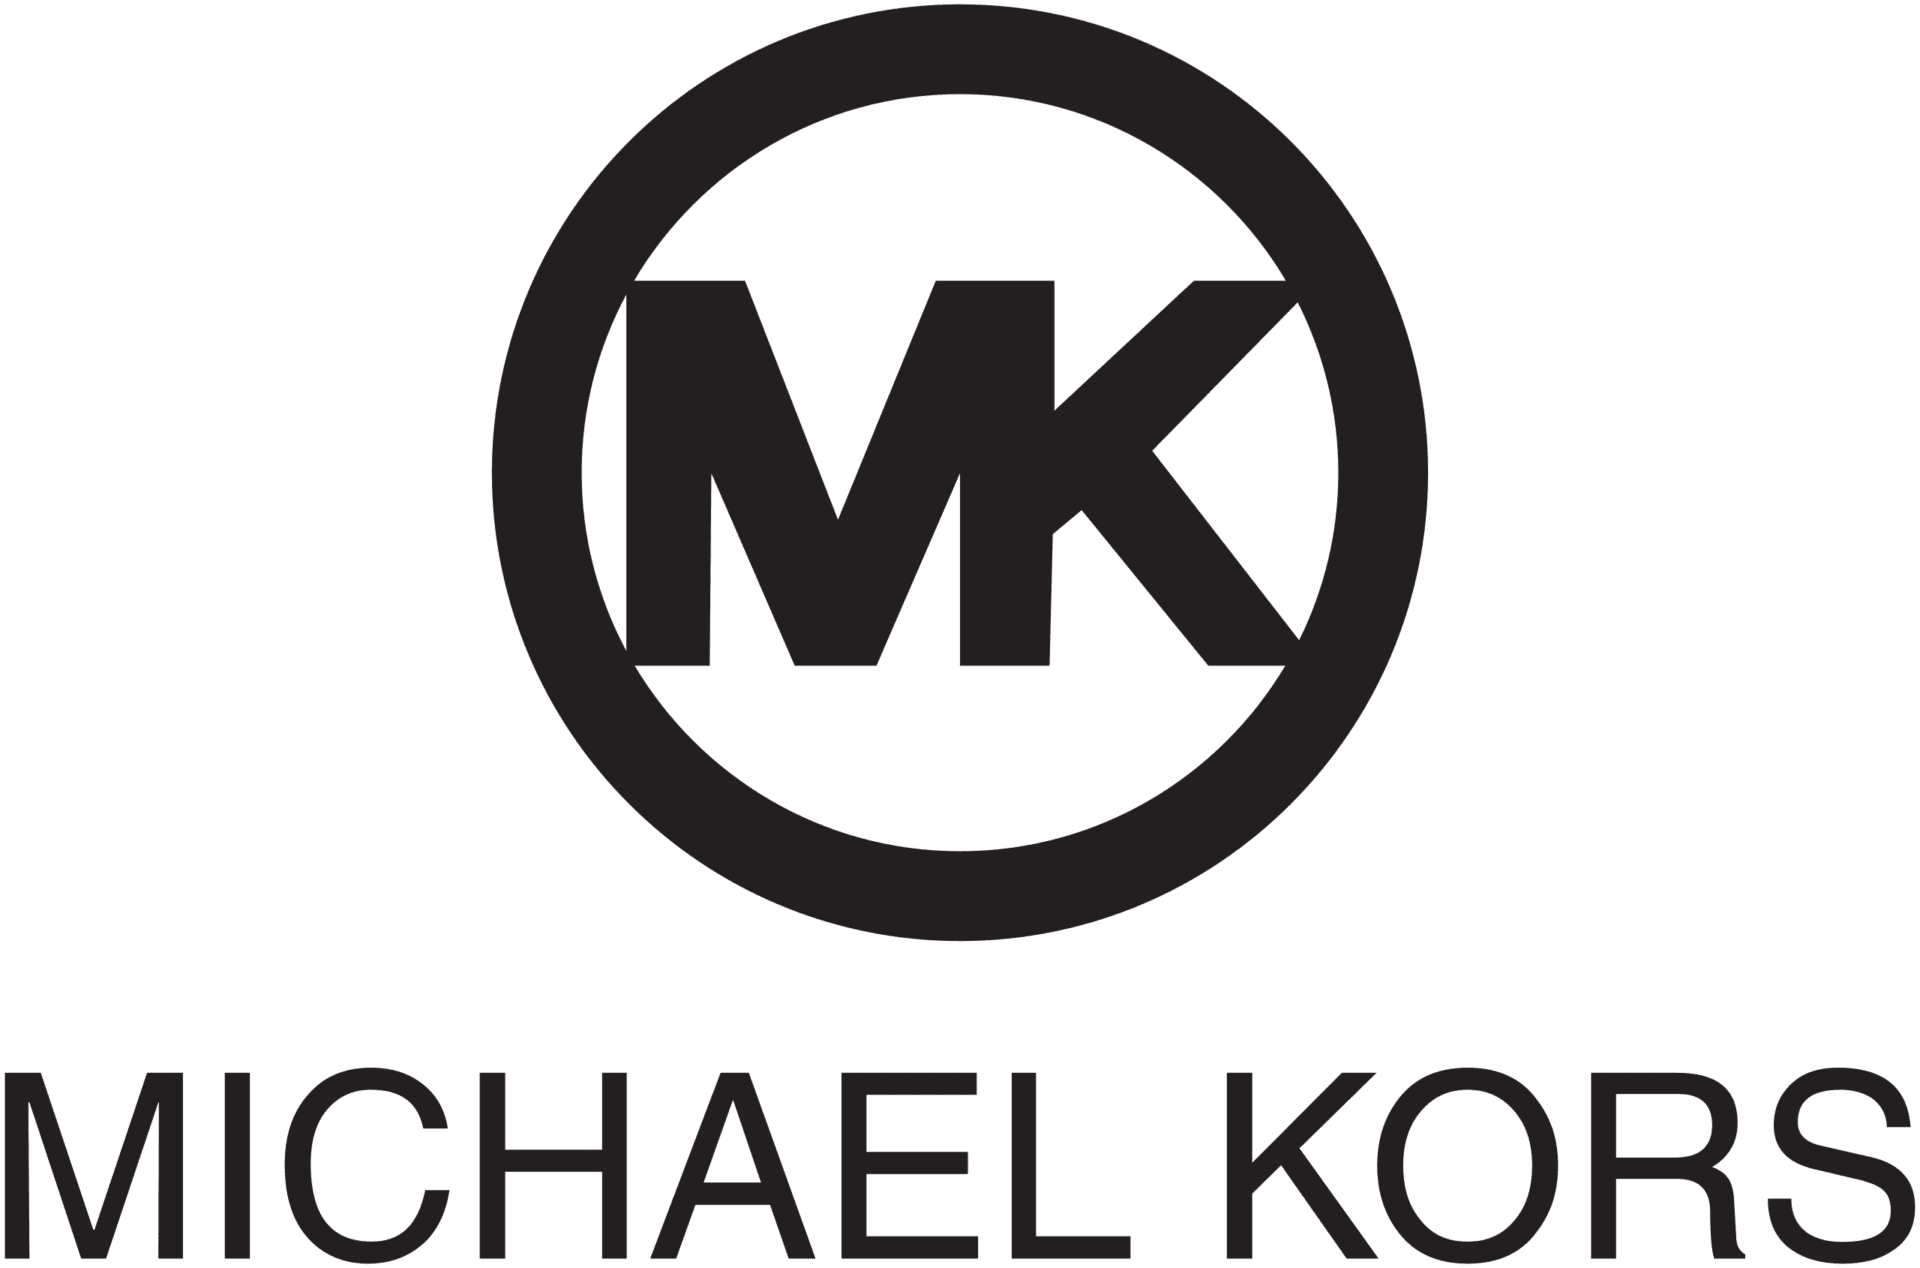 Michael_Kors_(brand)_logo